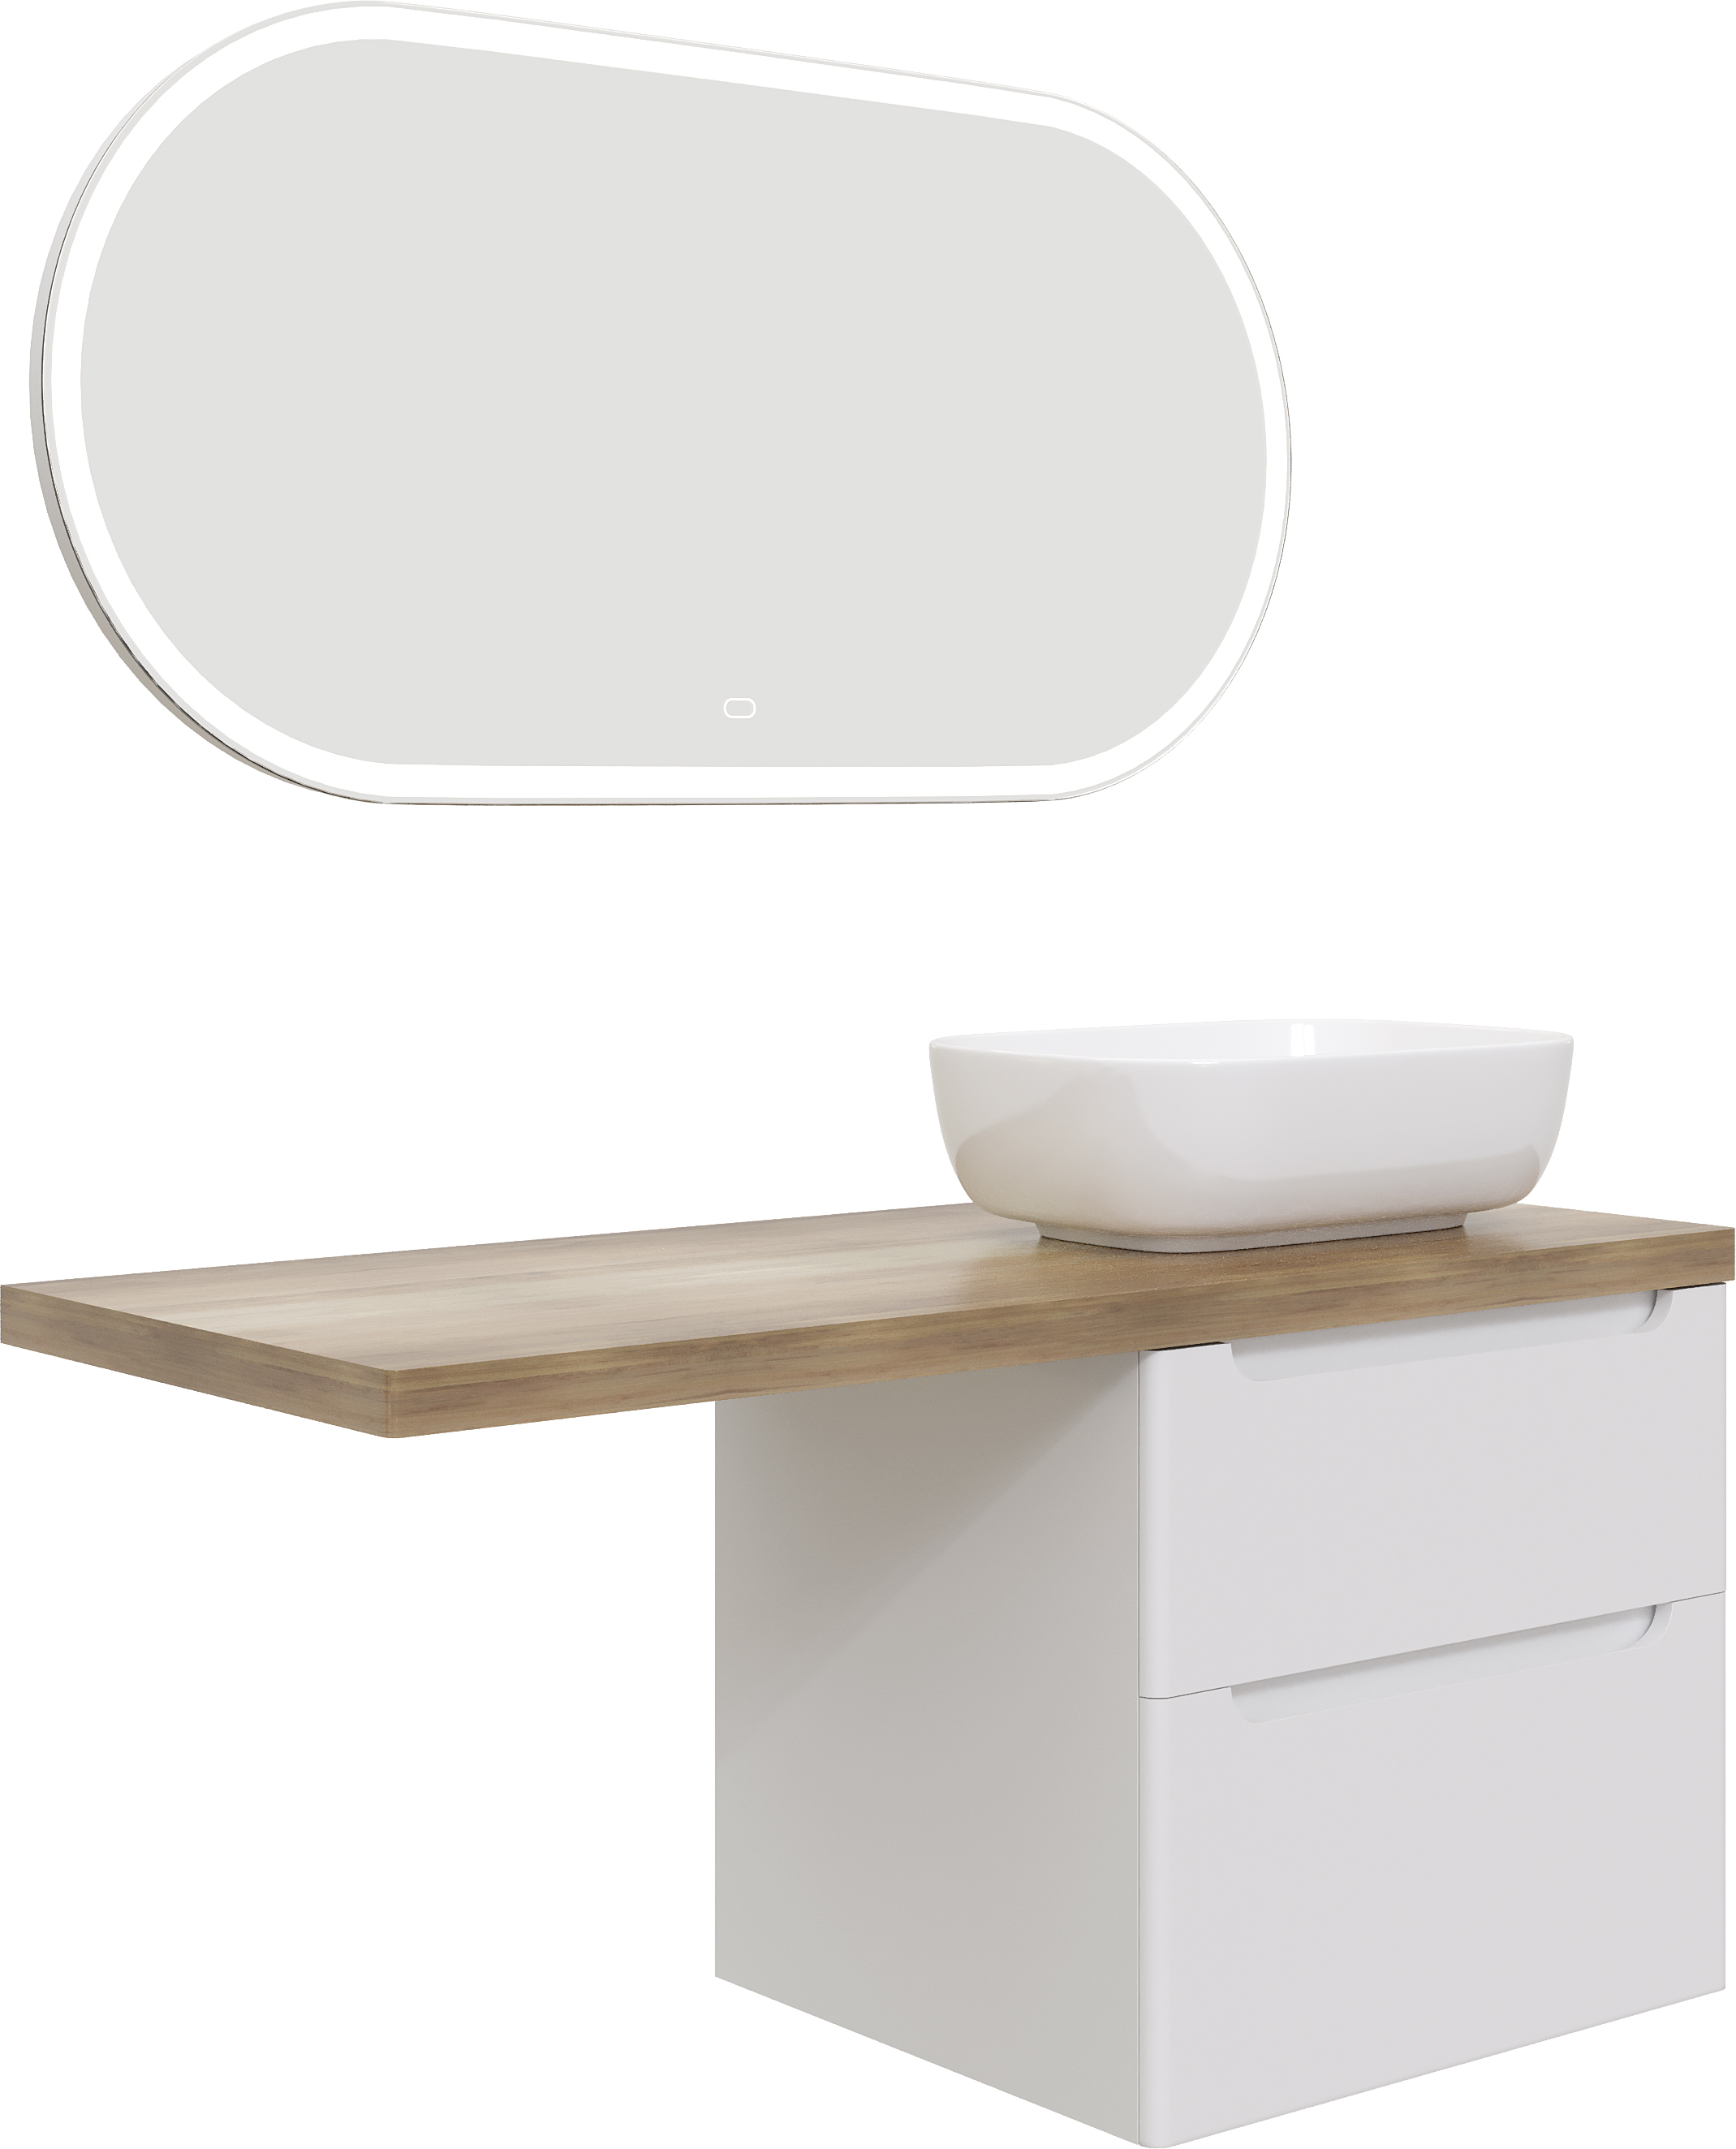 Мебель для ванной STWORKI Берген 60 белая со светлой столешницей 122, раковина Moduo 50 Square, L 549711 - 5